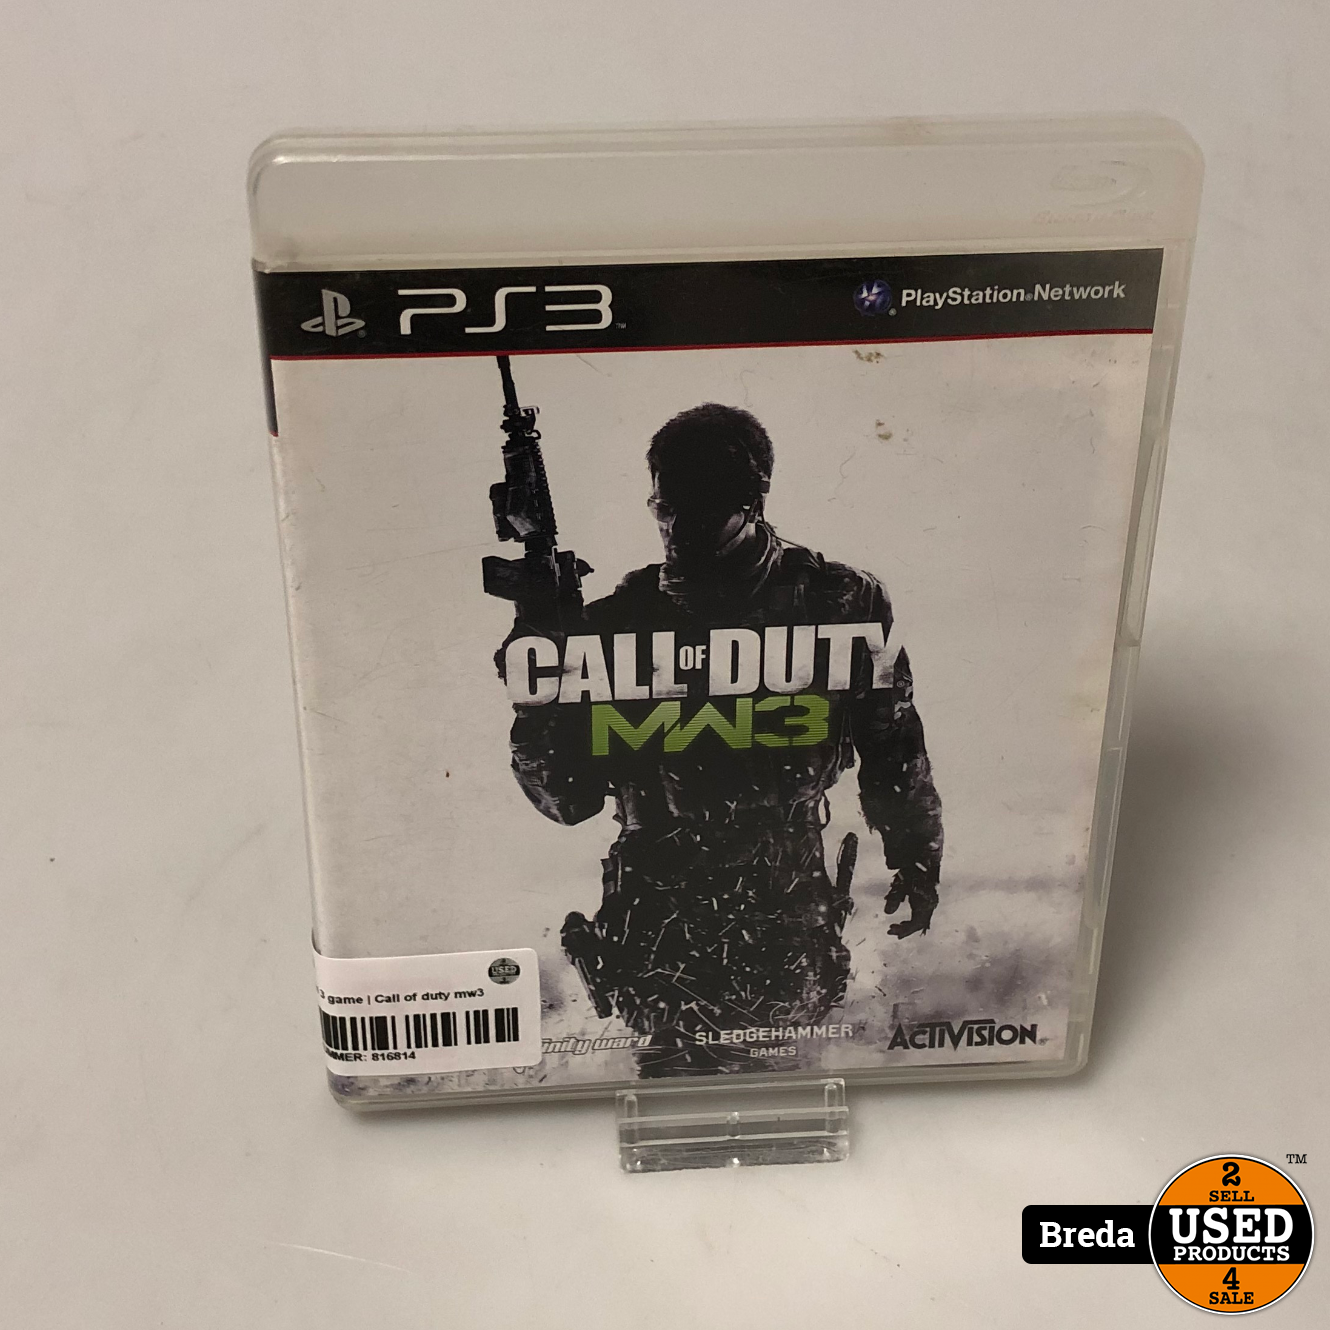 kapsel Ontspannend Lastig Playstation 3 spel | Call of duty mw3 - Used Products Breda